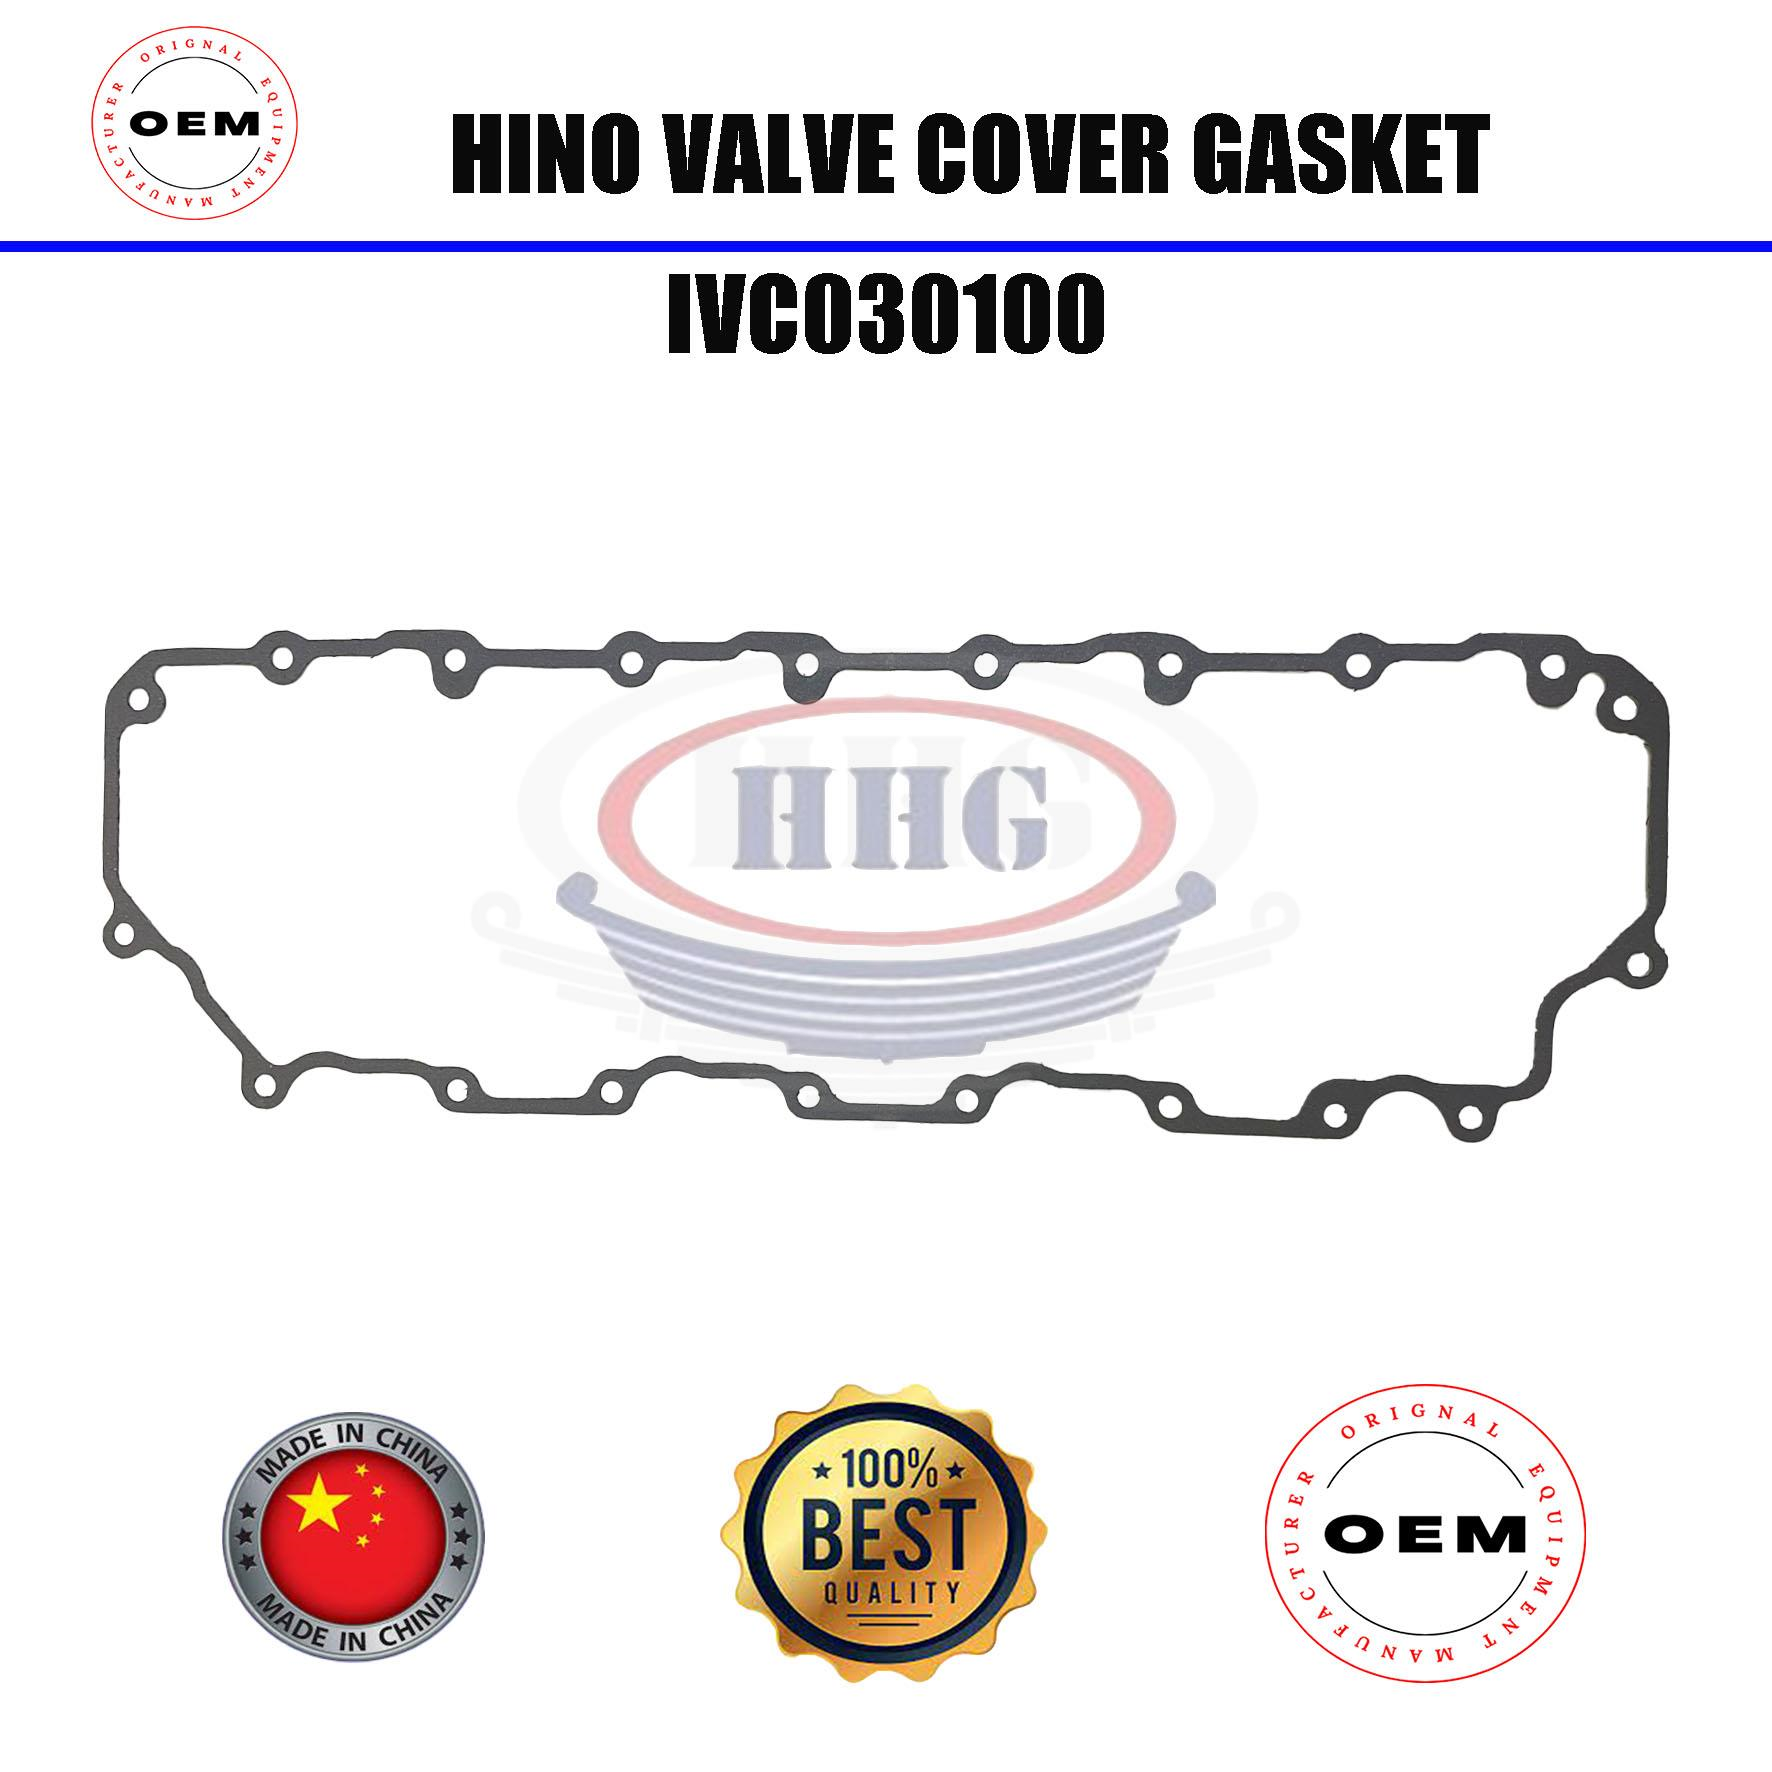 OEM Hino F20C Valve Cover Gasket (IVC030100)